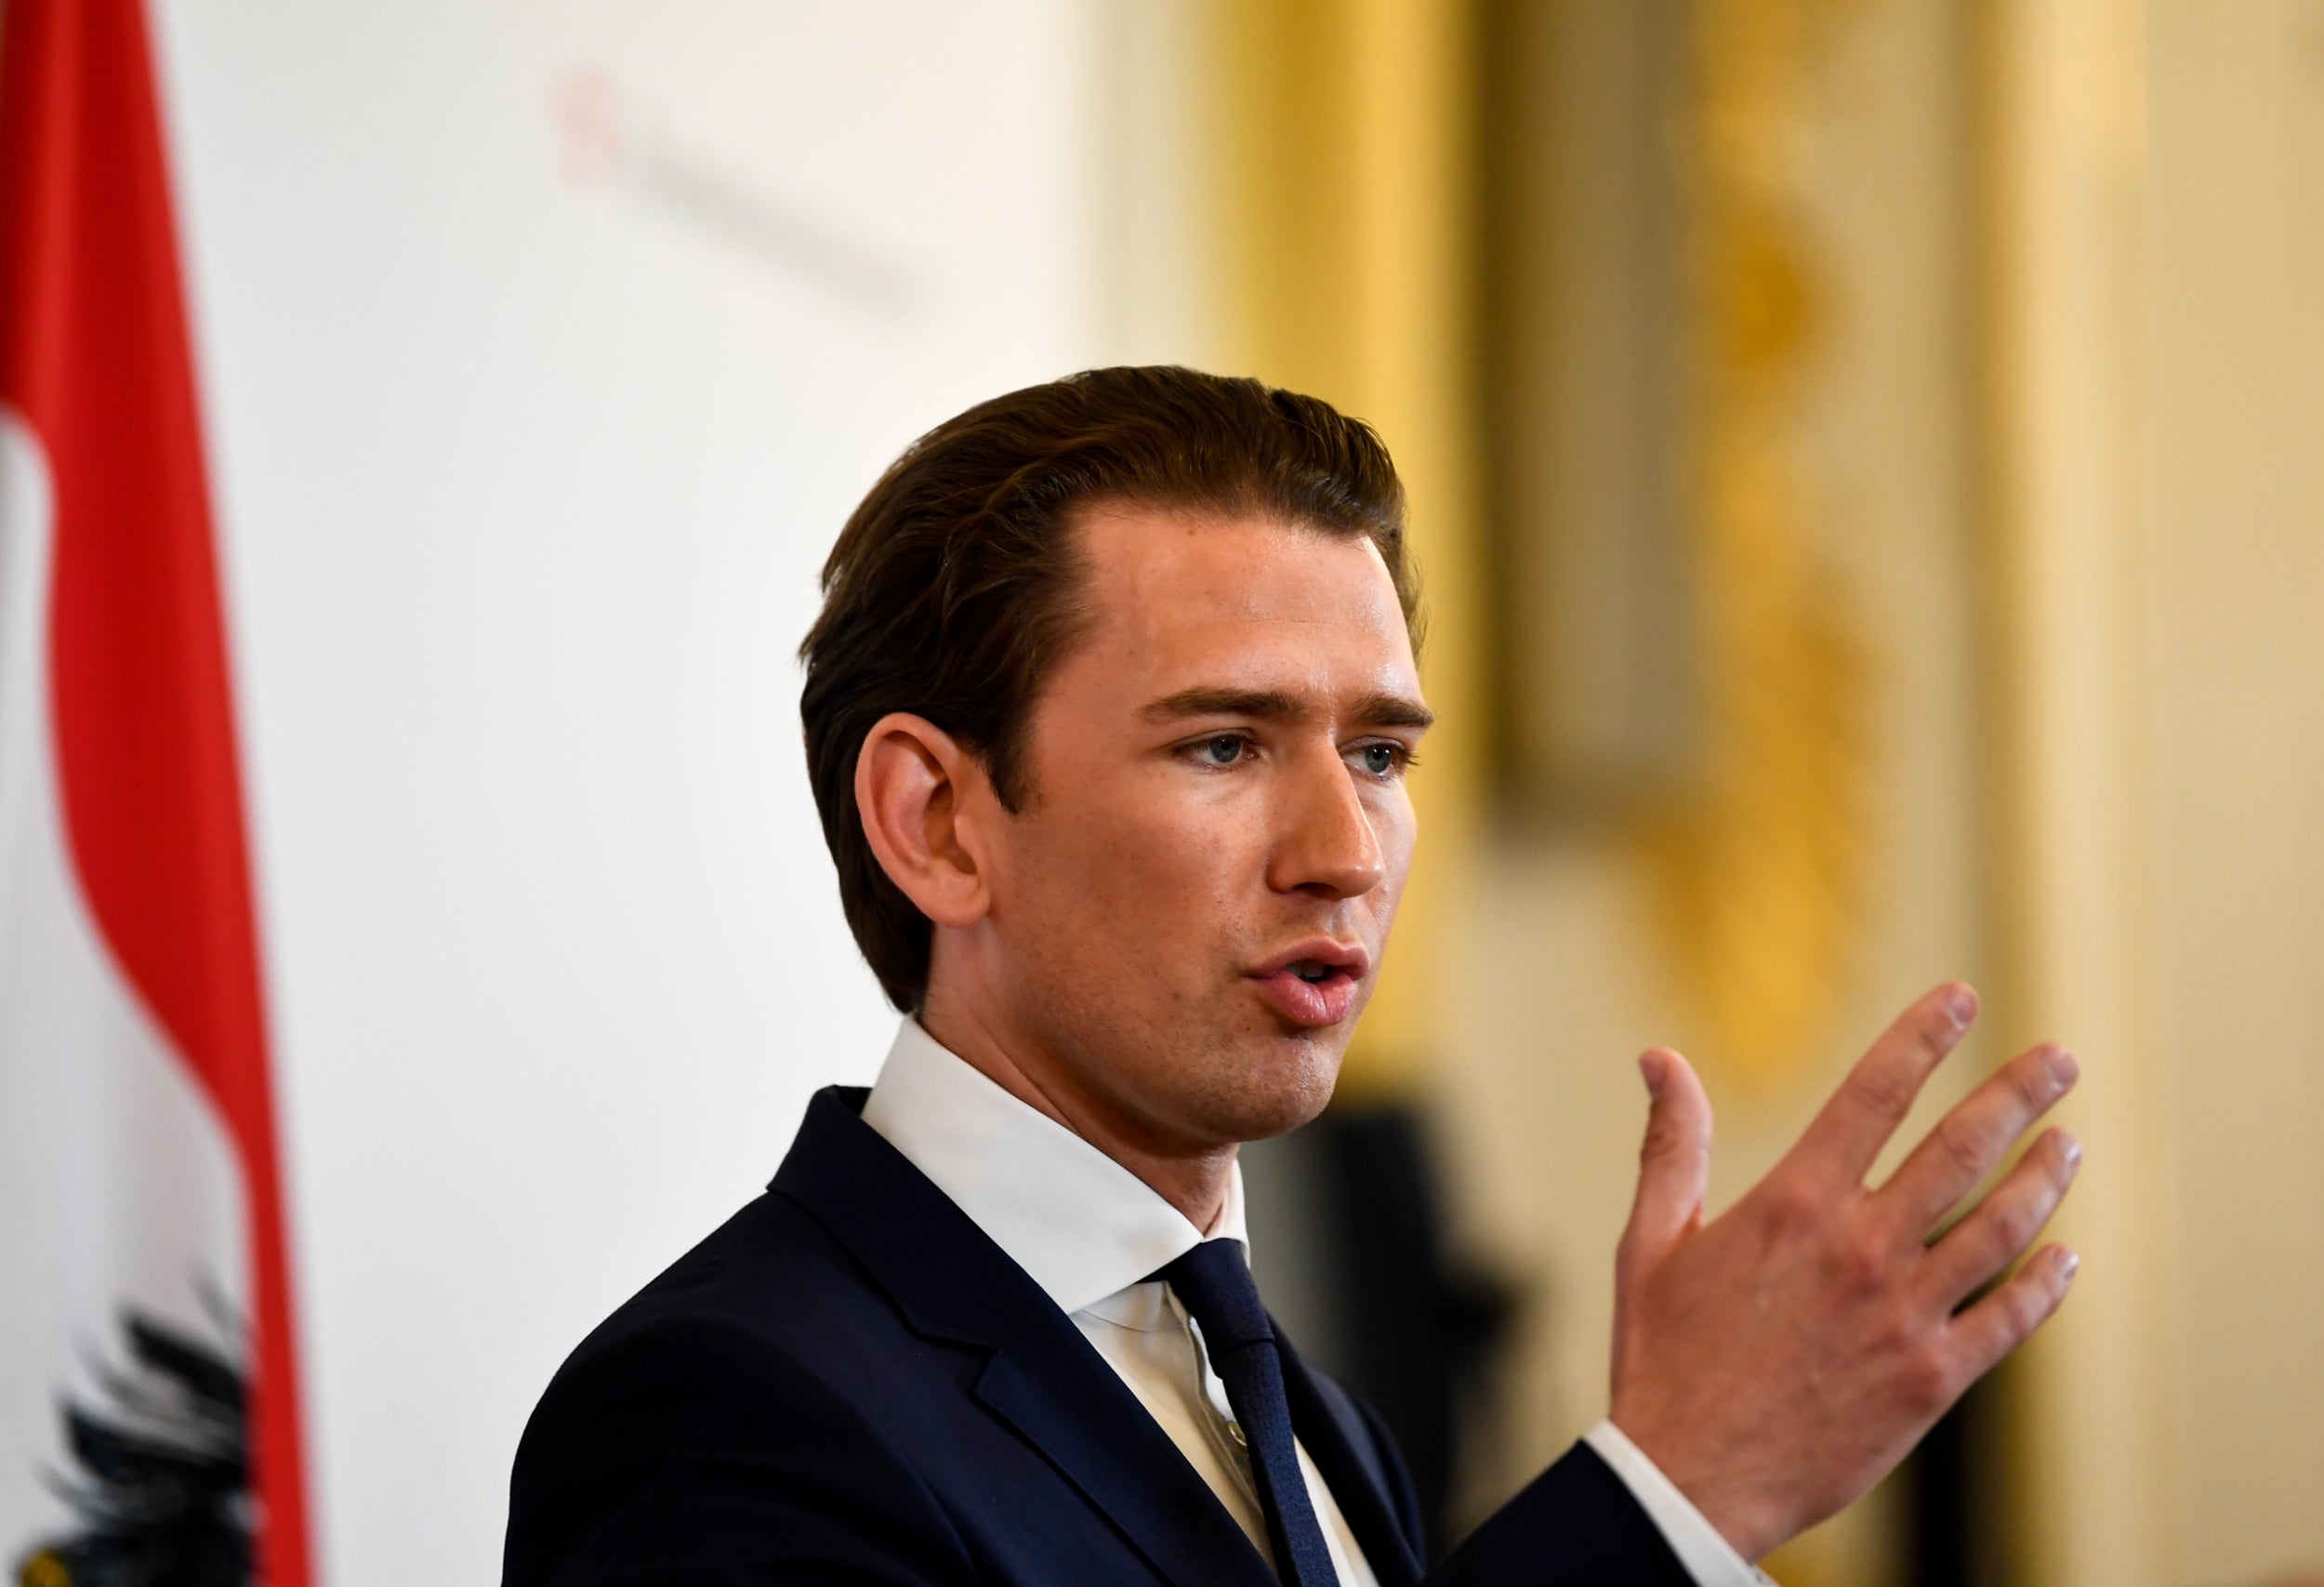 Austrian elections: Right-wing leader Sebastian Kurz set to return to power